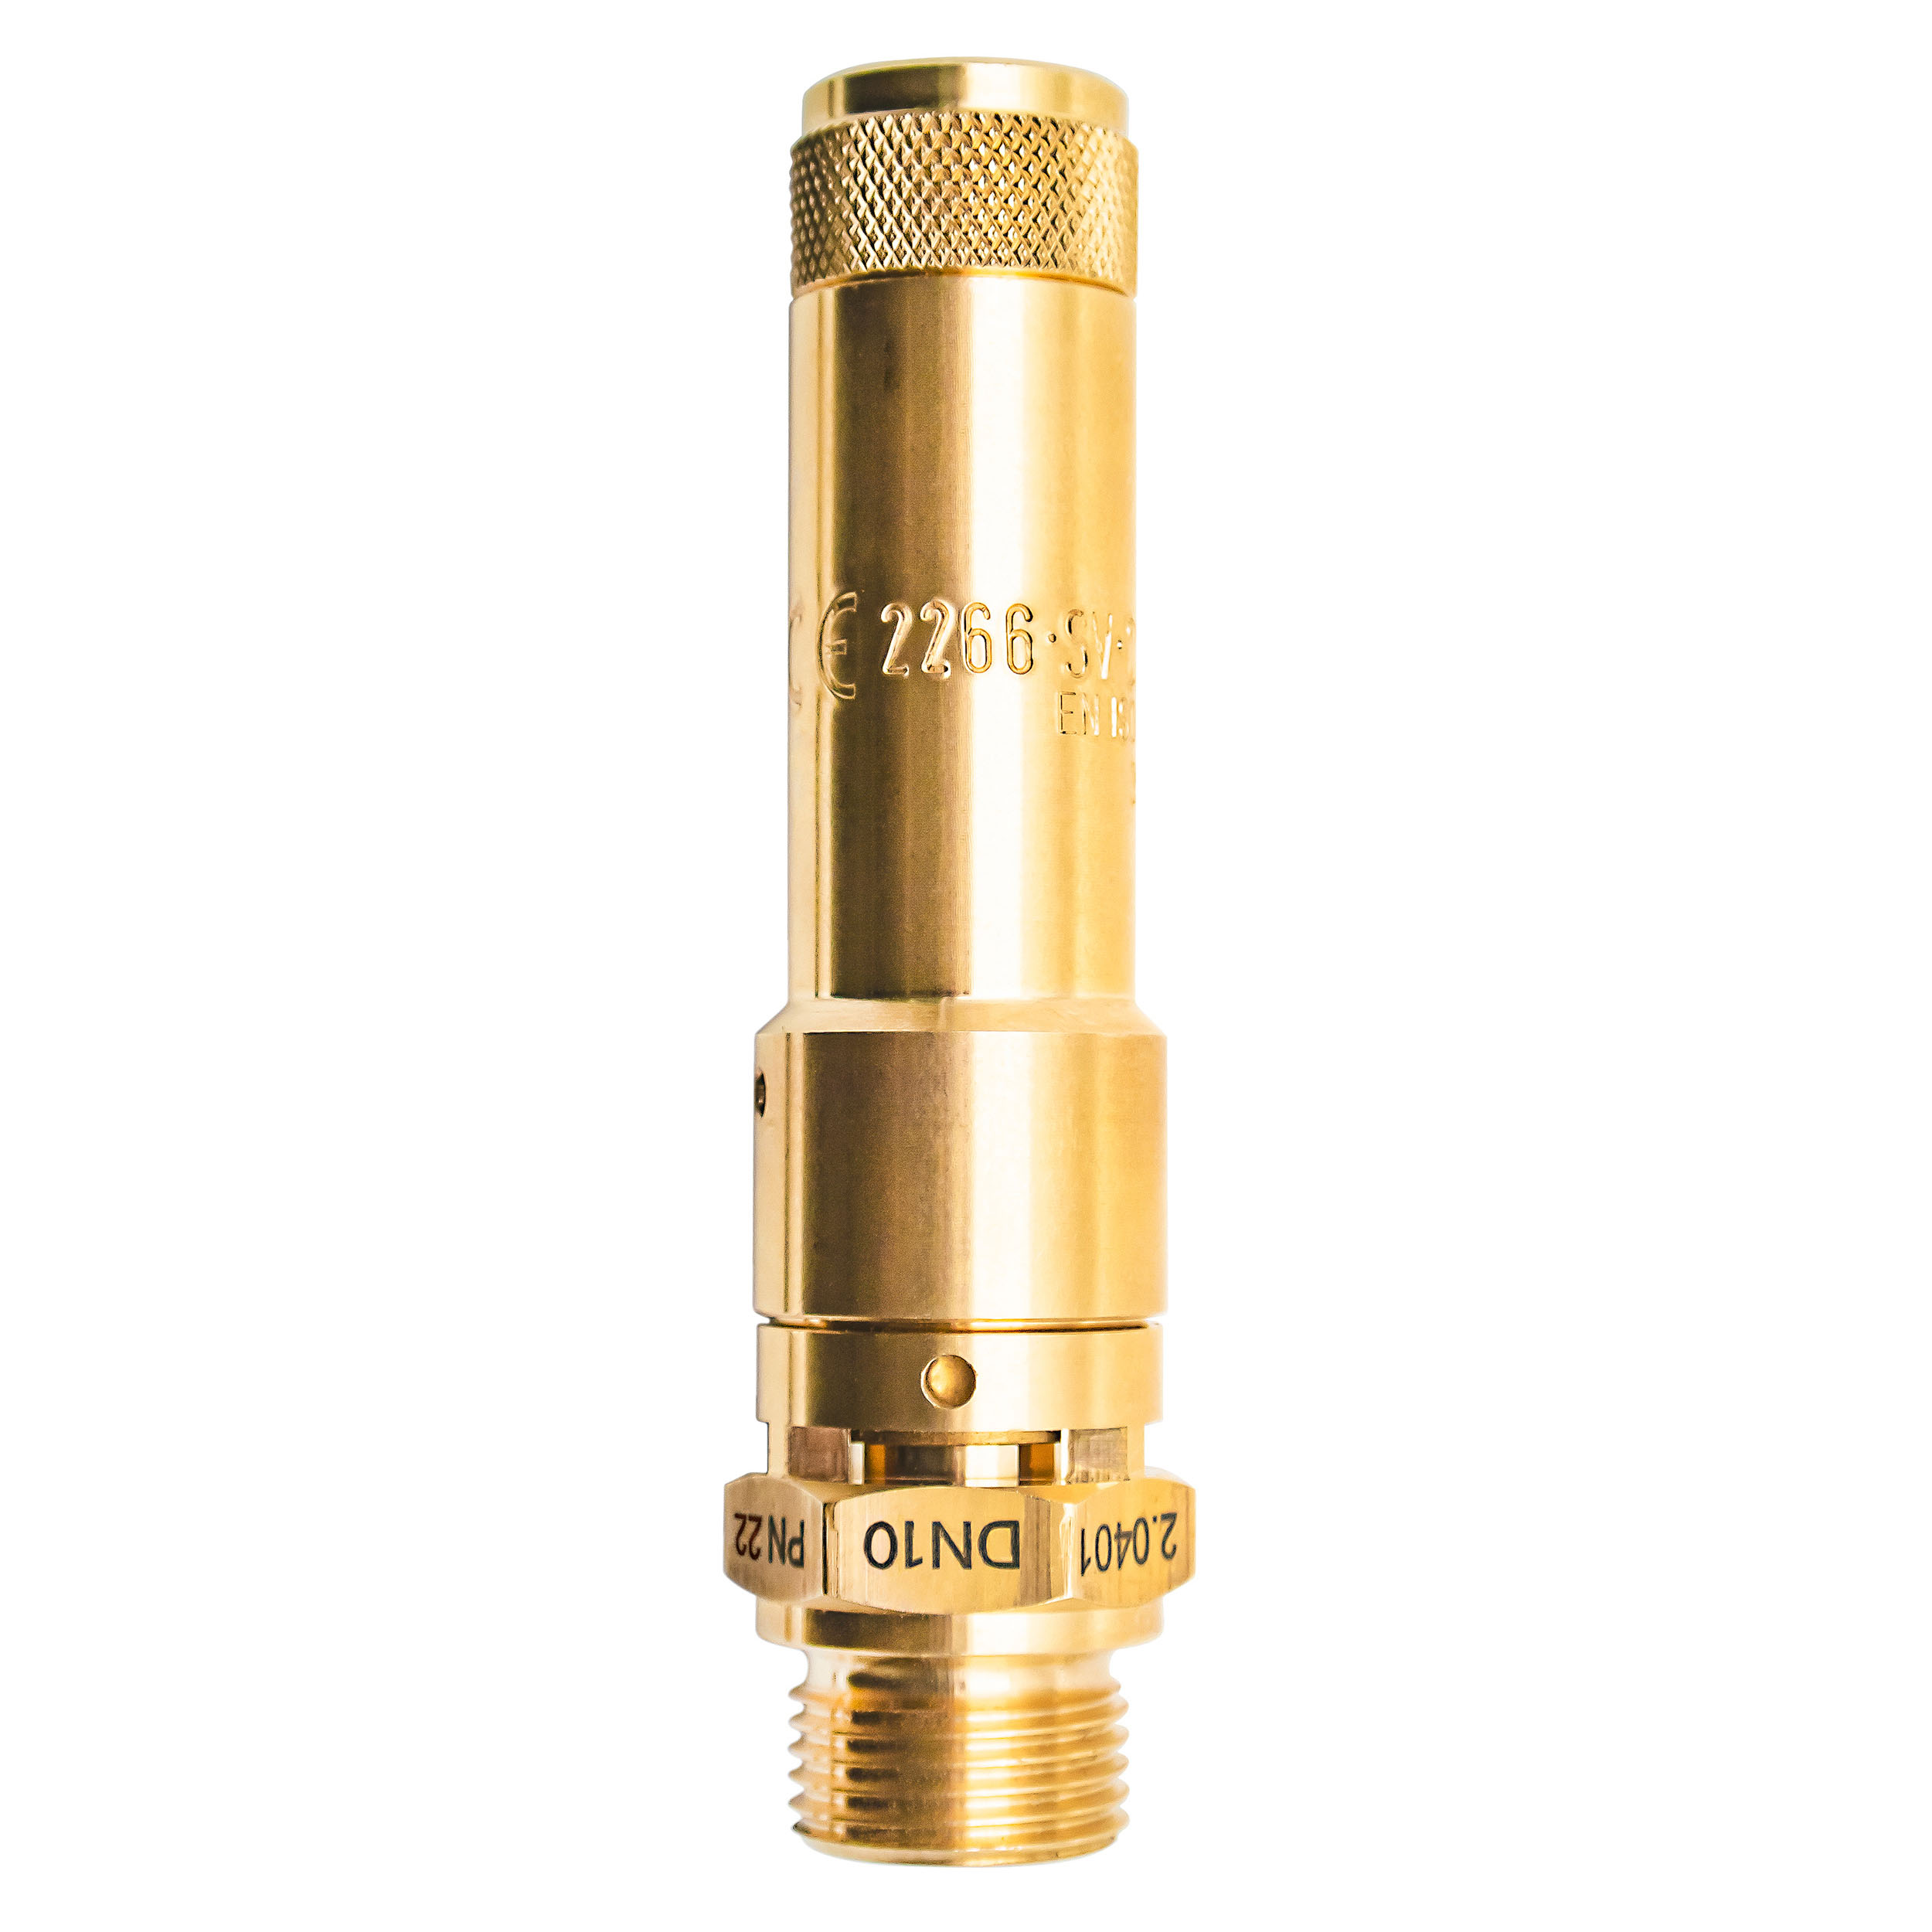 Component-tested safety valve DN 10, G¾, pressure: 5.1-7 bar